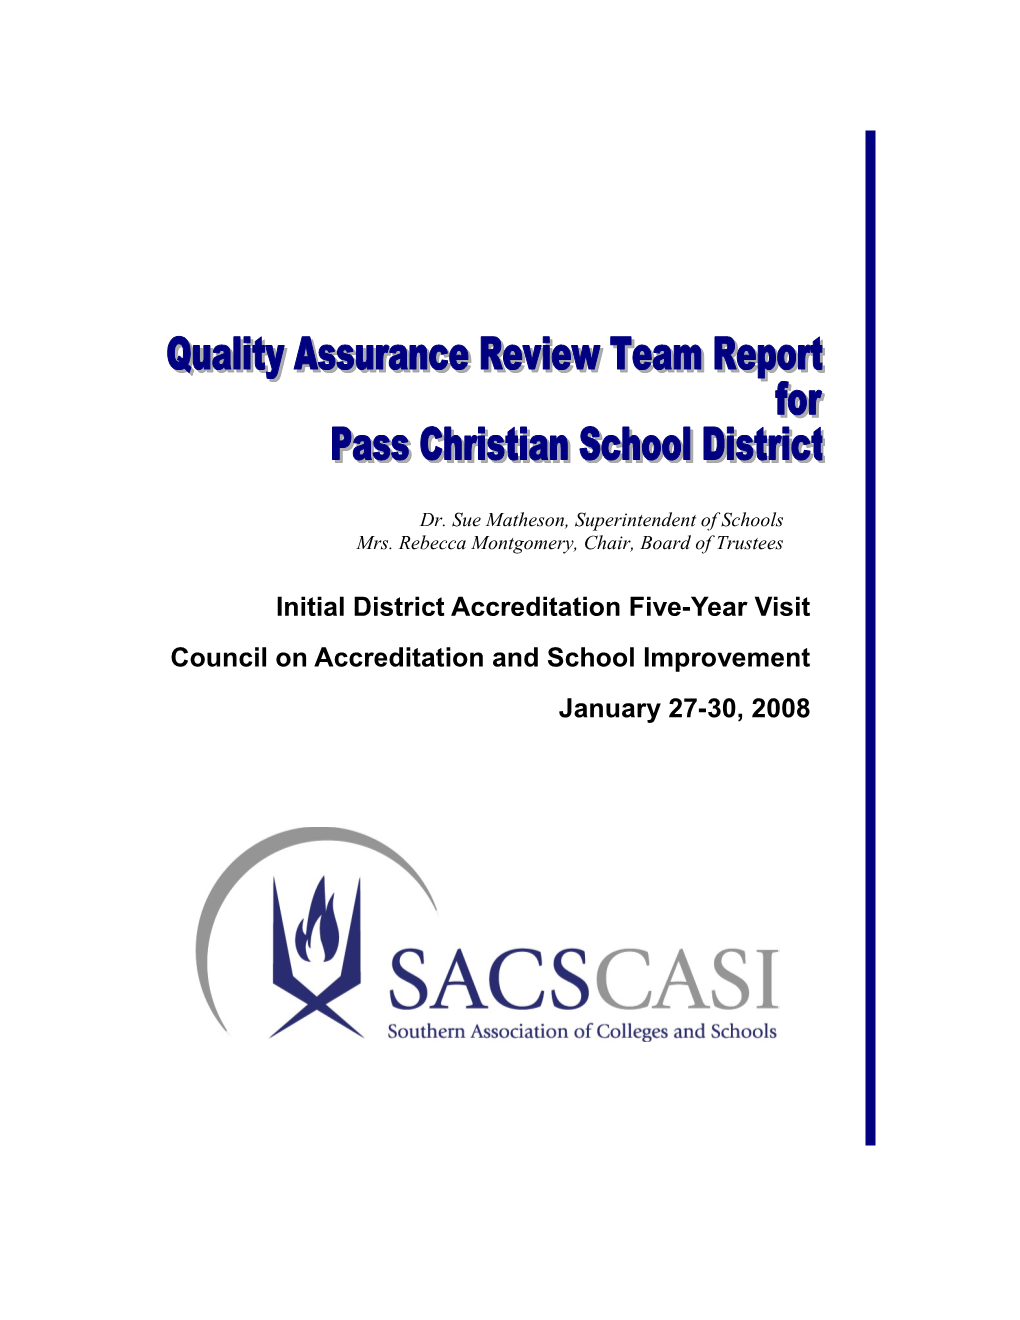 Pass Christian School District